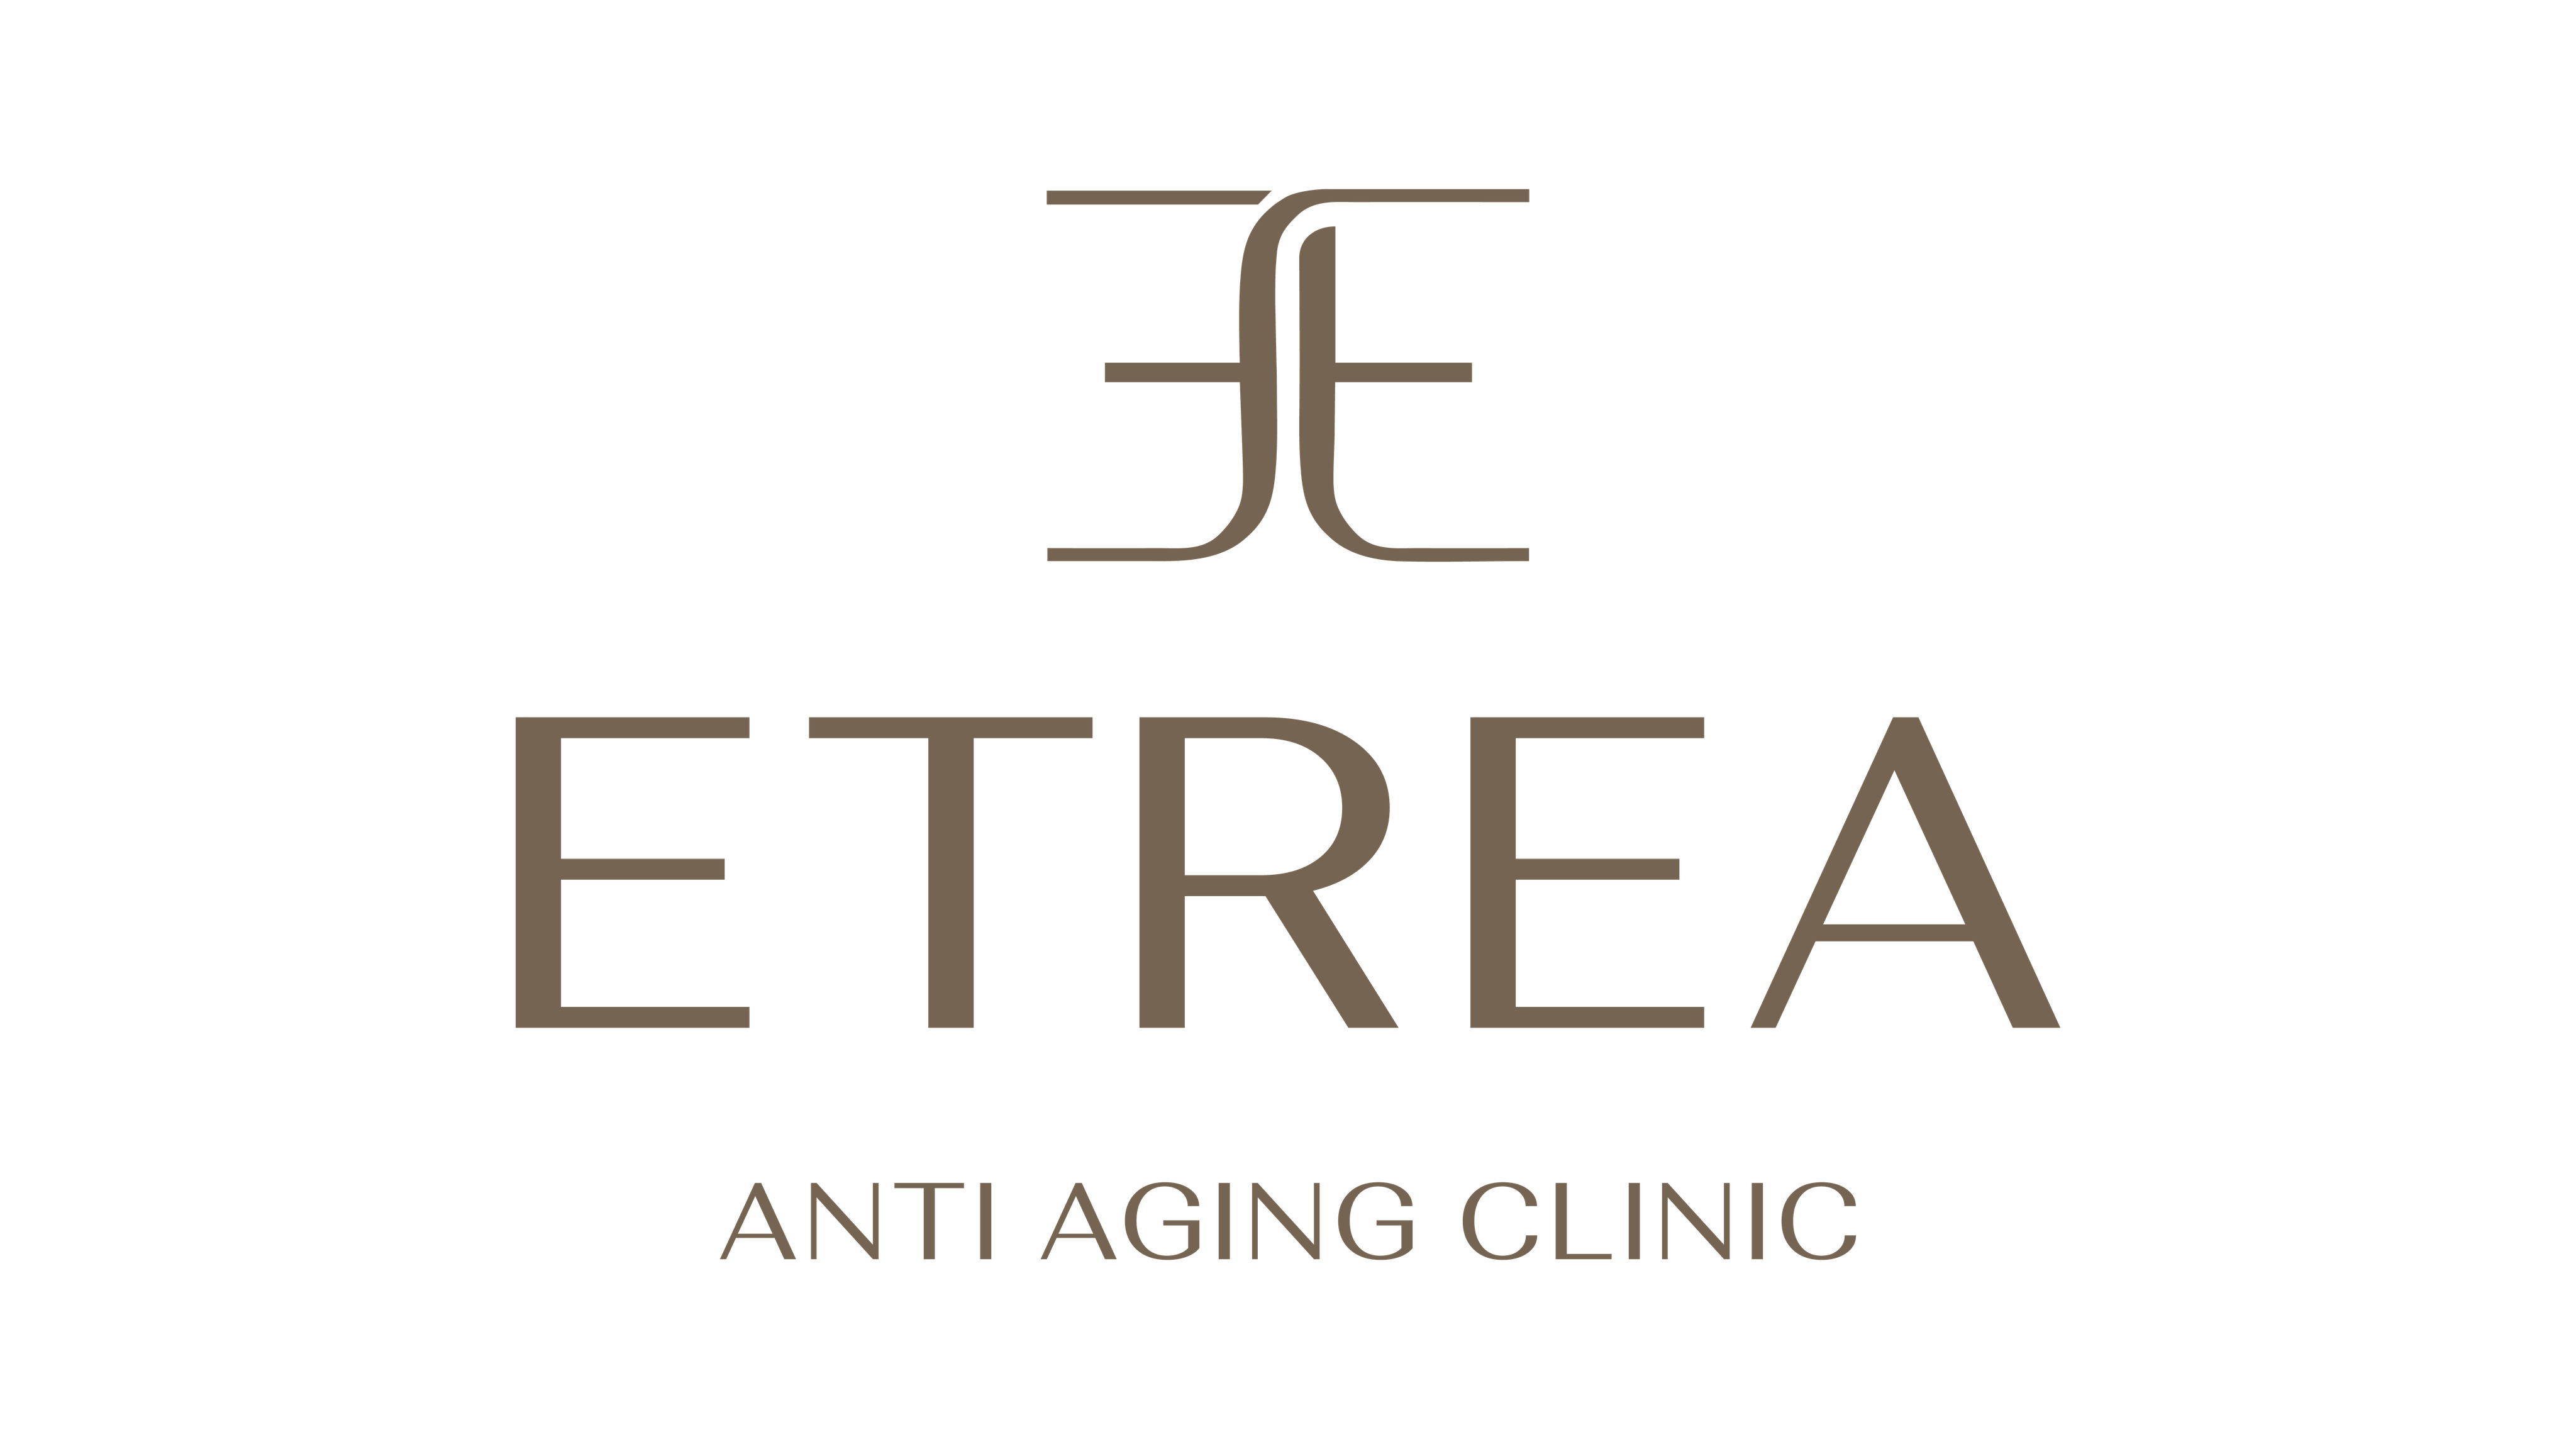 ETREA ANTI AGING CLINIC logo